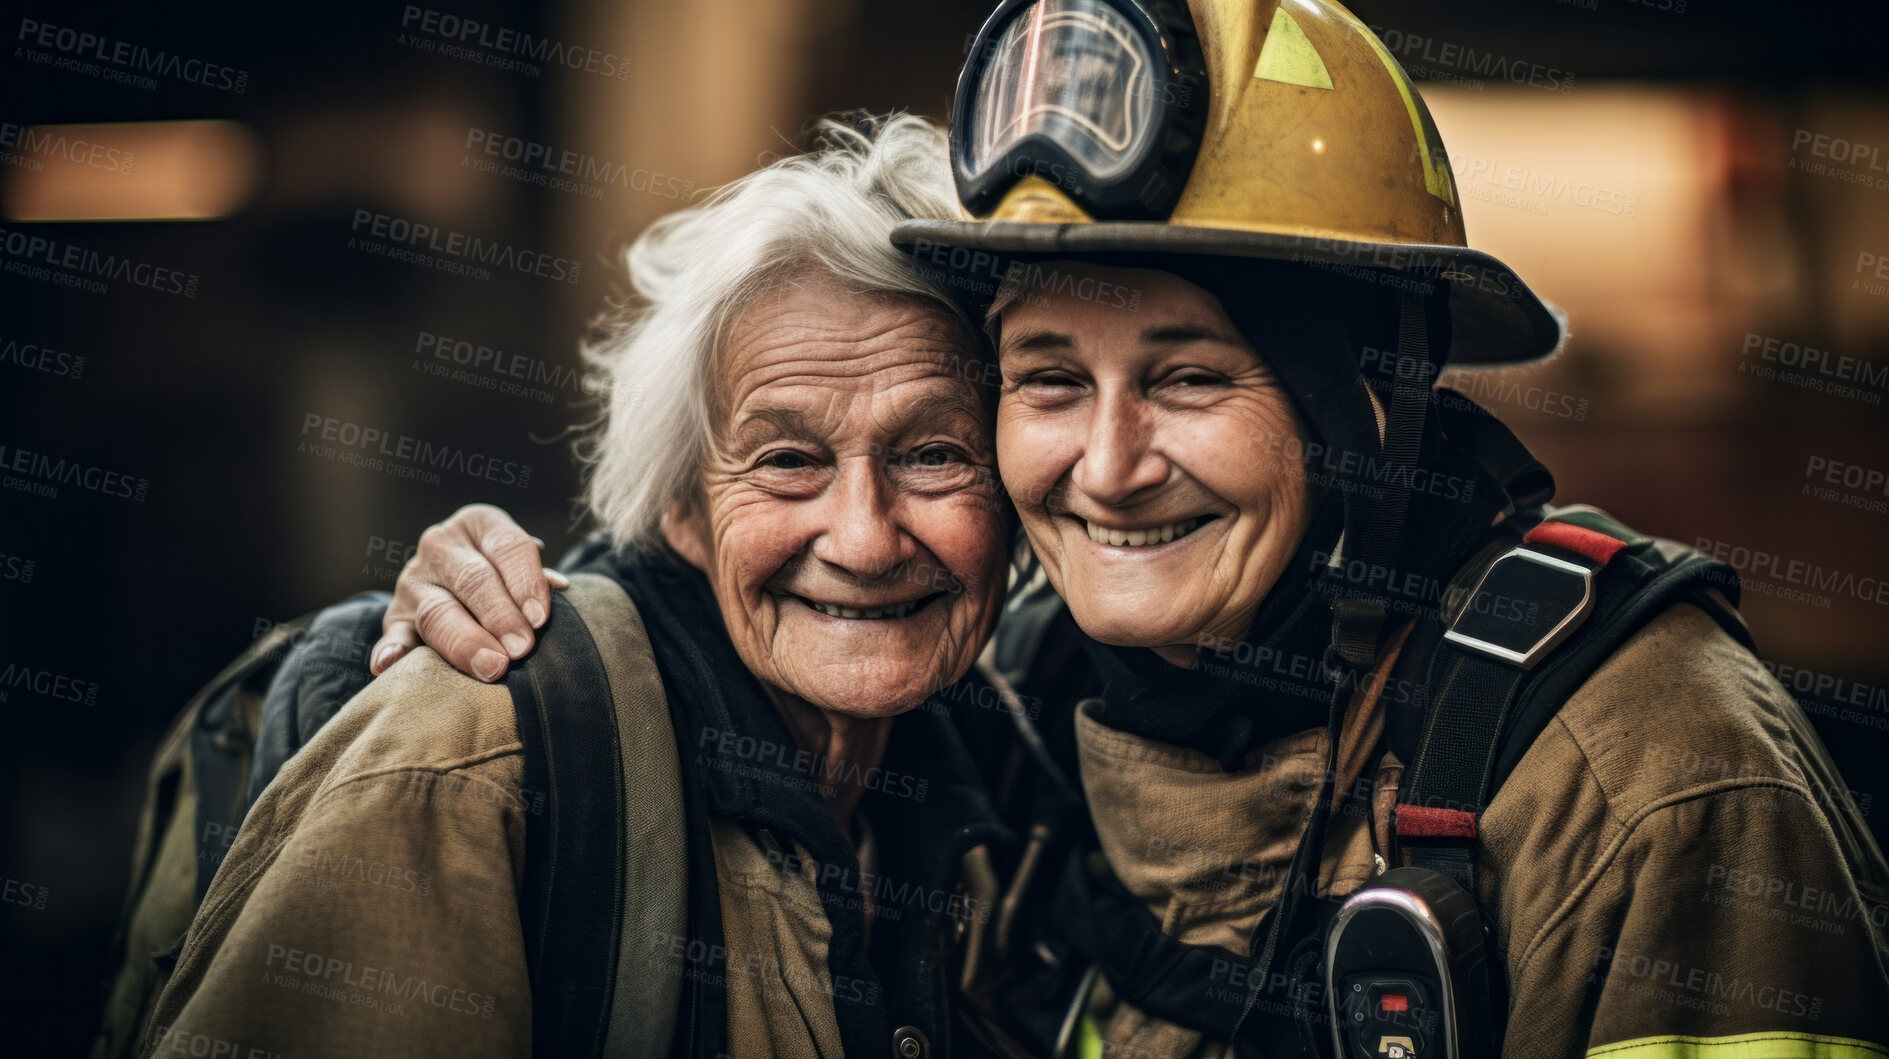 Buy stock photo Happy firefighter with senior citizen Safety, brave rescue, survivor concept